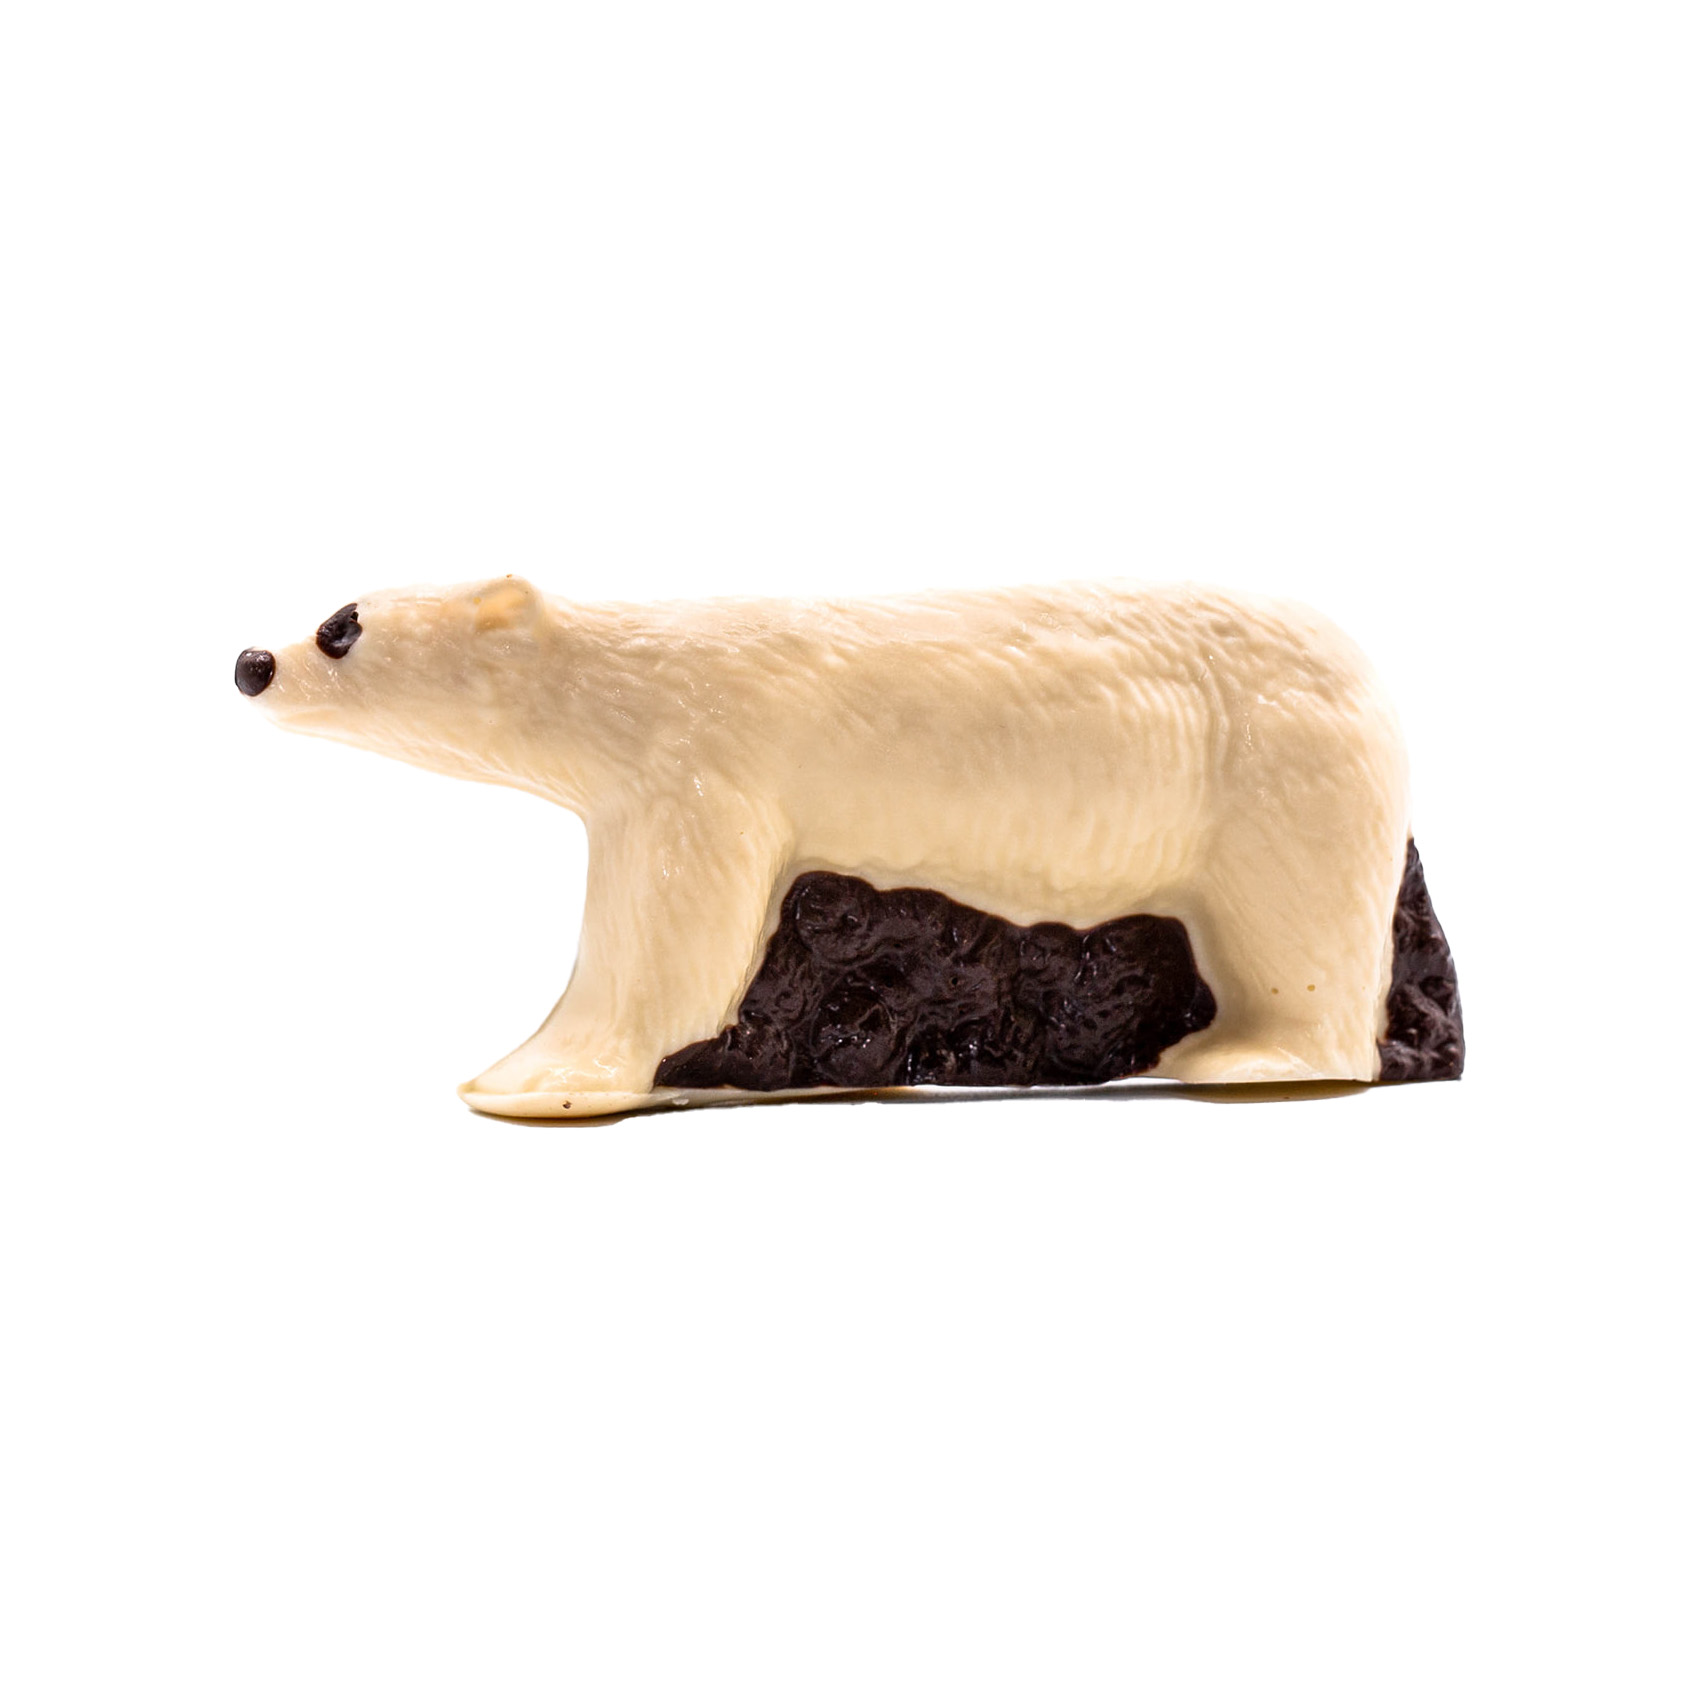 Wholesale Polar Bear - Luxury plush teddy bear for your store